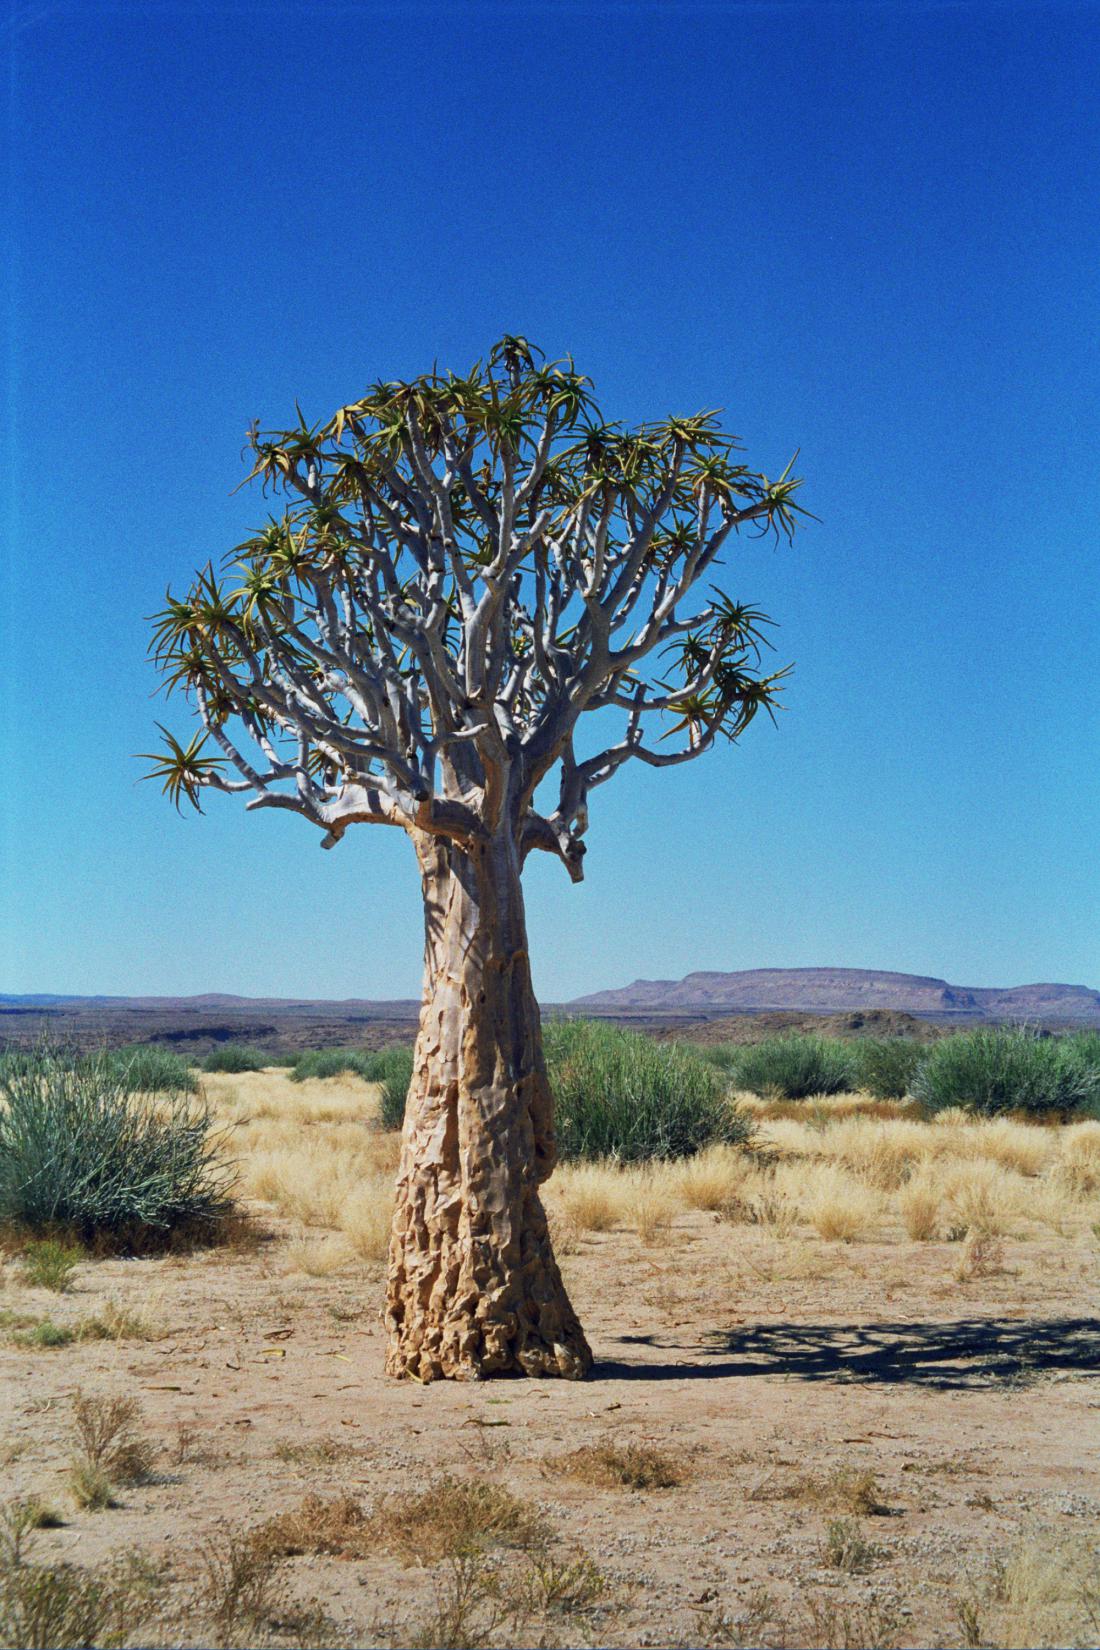 Drevo kokerboom